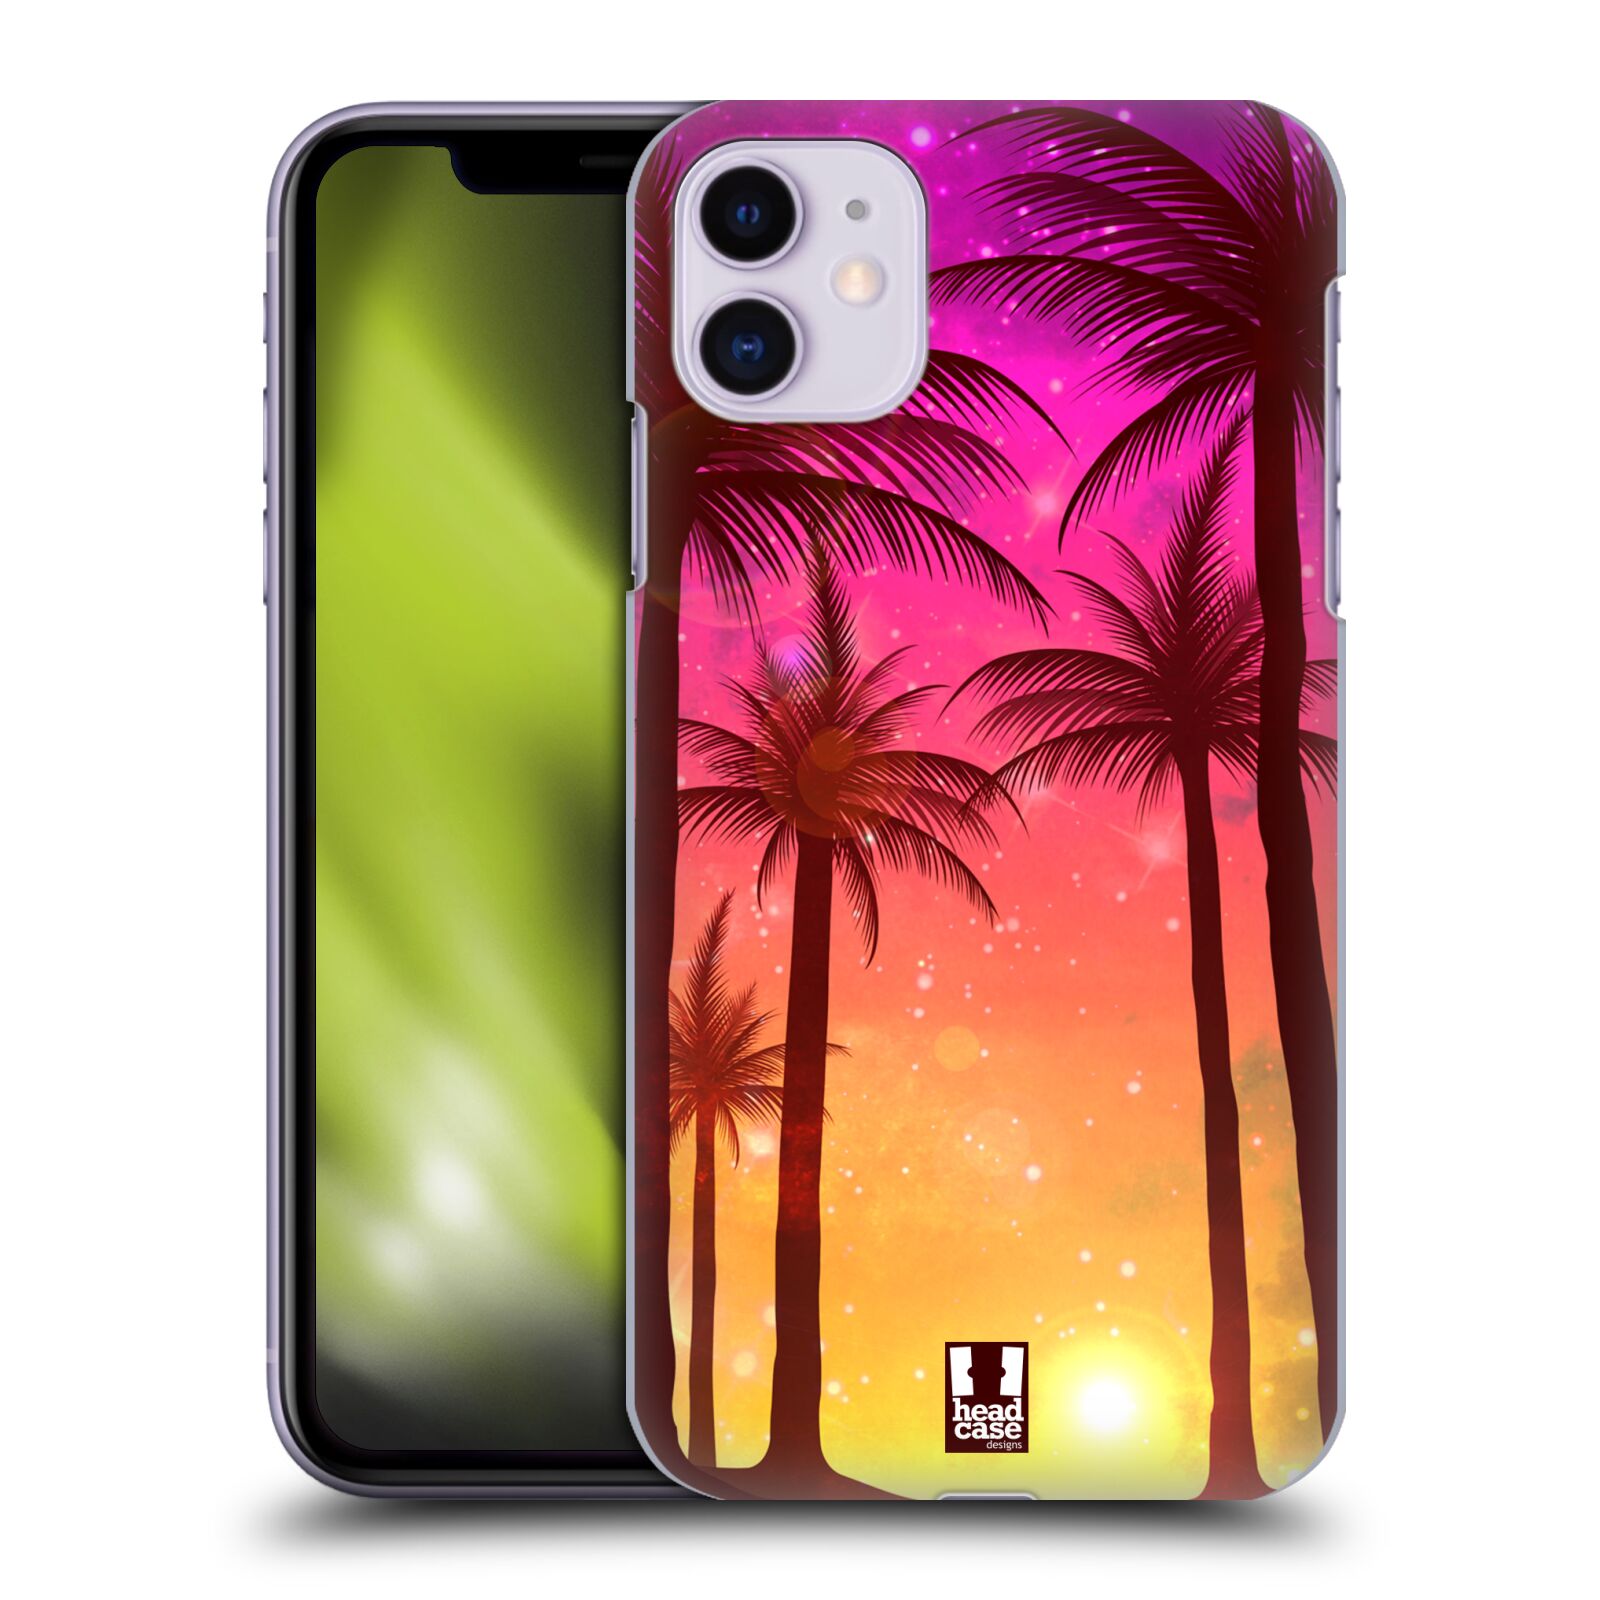 Pouzdro na mobil Apple Iphone 11 - HEAD CASE - vzor Kreslený motiv silueta moře a palmy RŮŽOVÁ